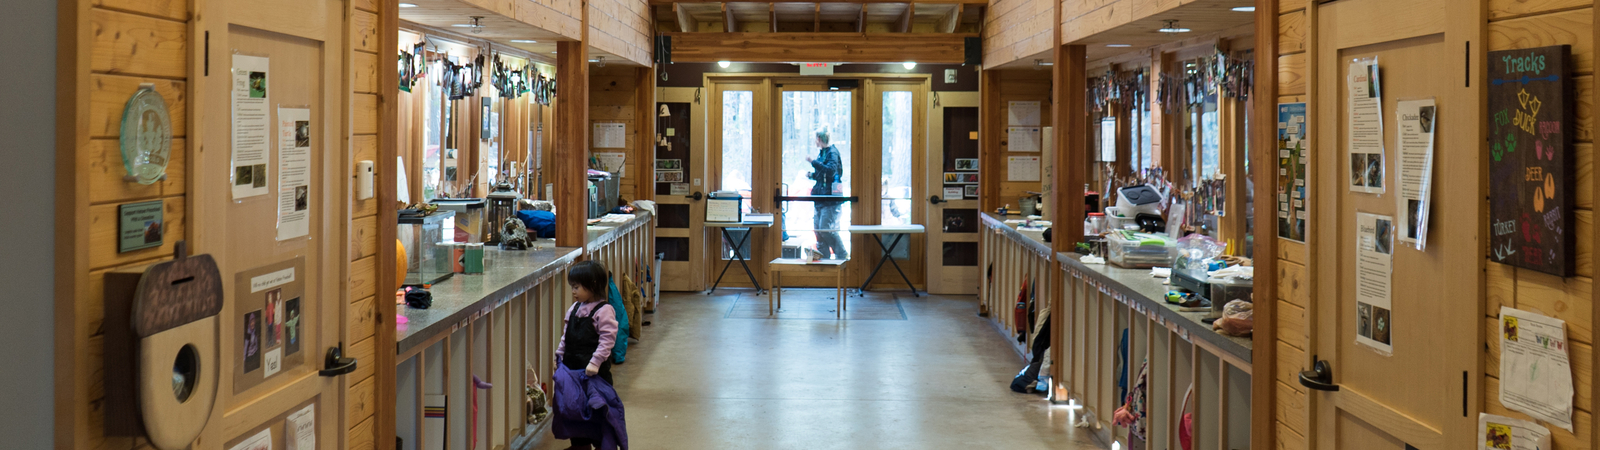 Inside the nature preschool at Chippewa Nature Center